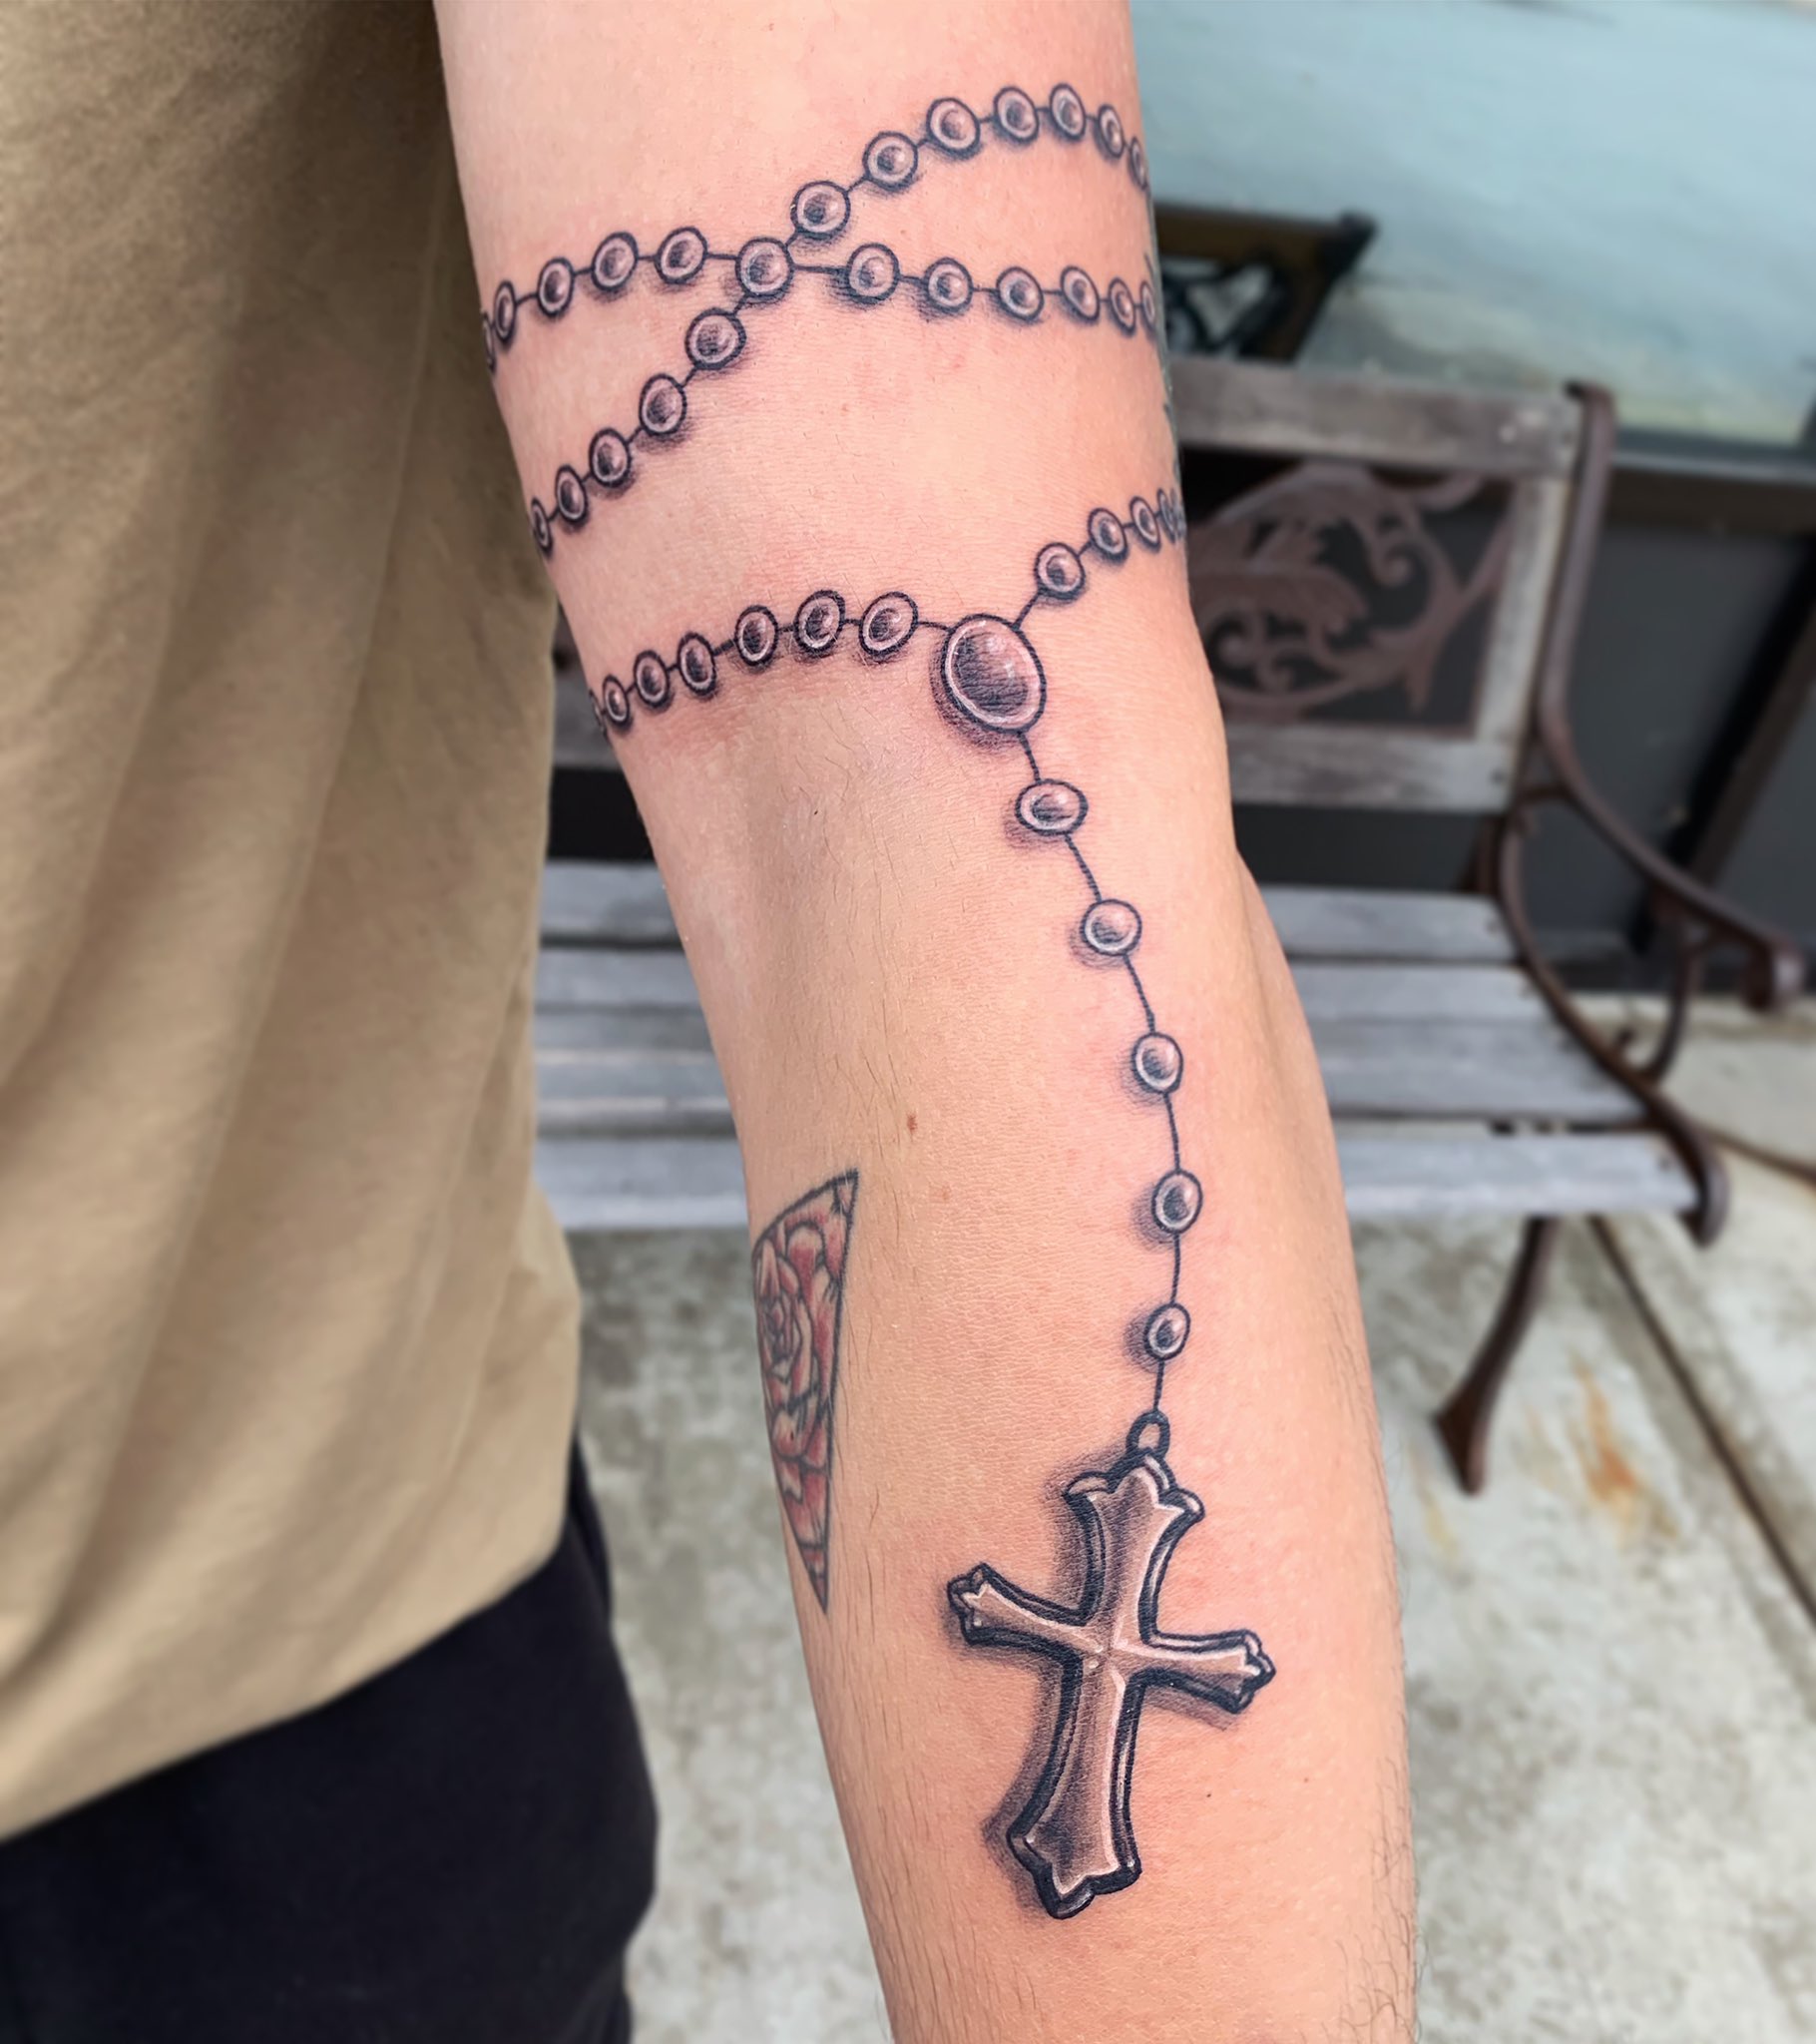 Fine line style wrist wrap rosary tattoo.